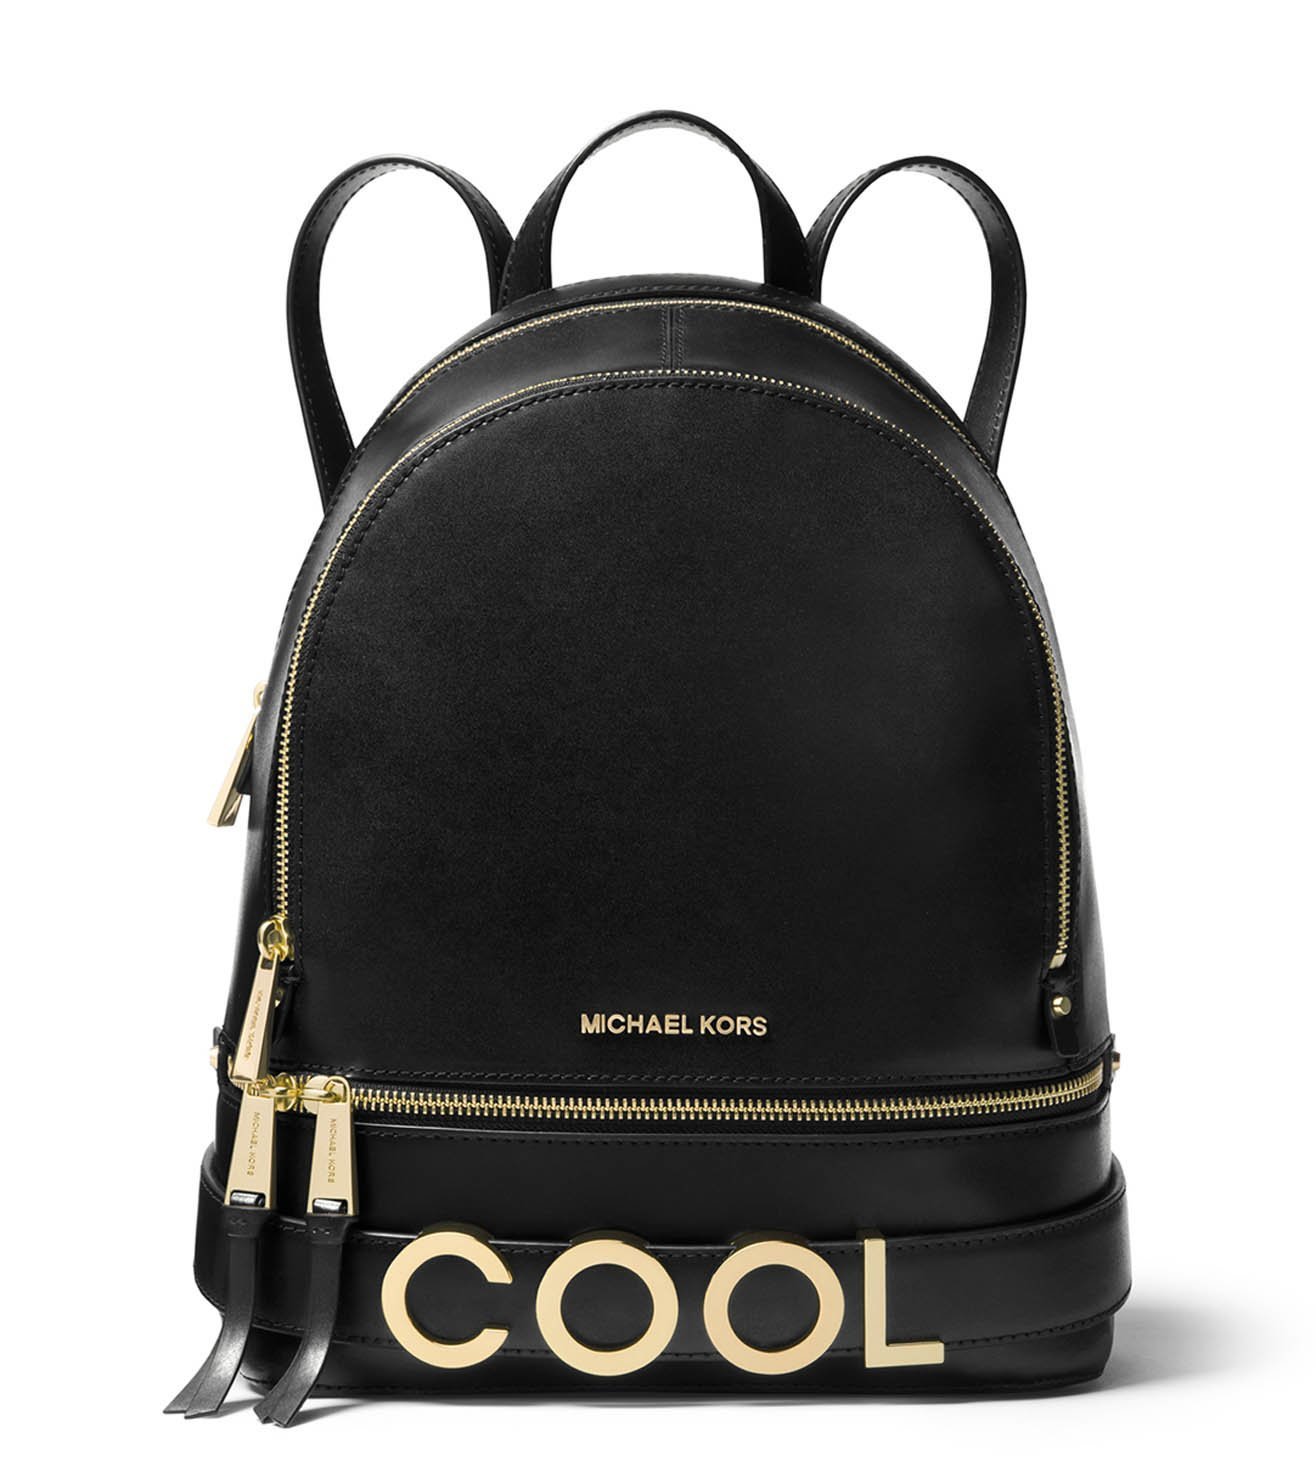 michael kors backpack cool